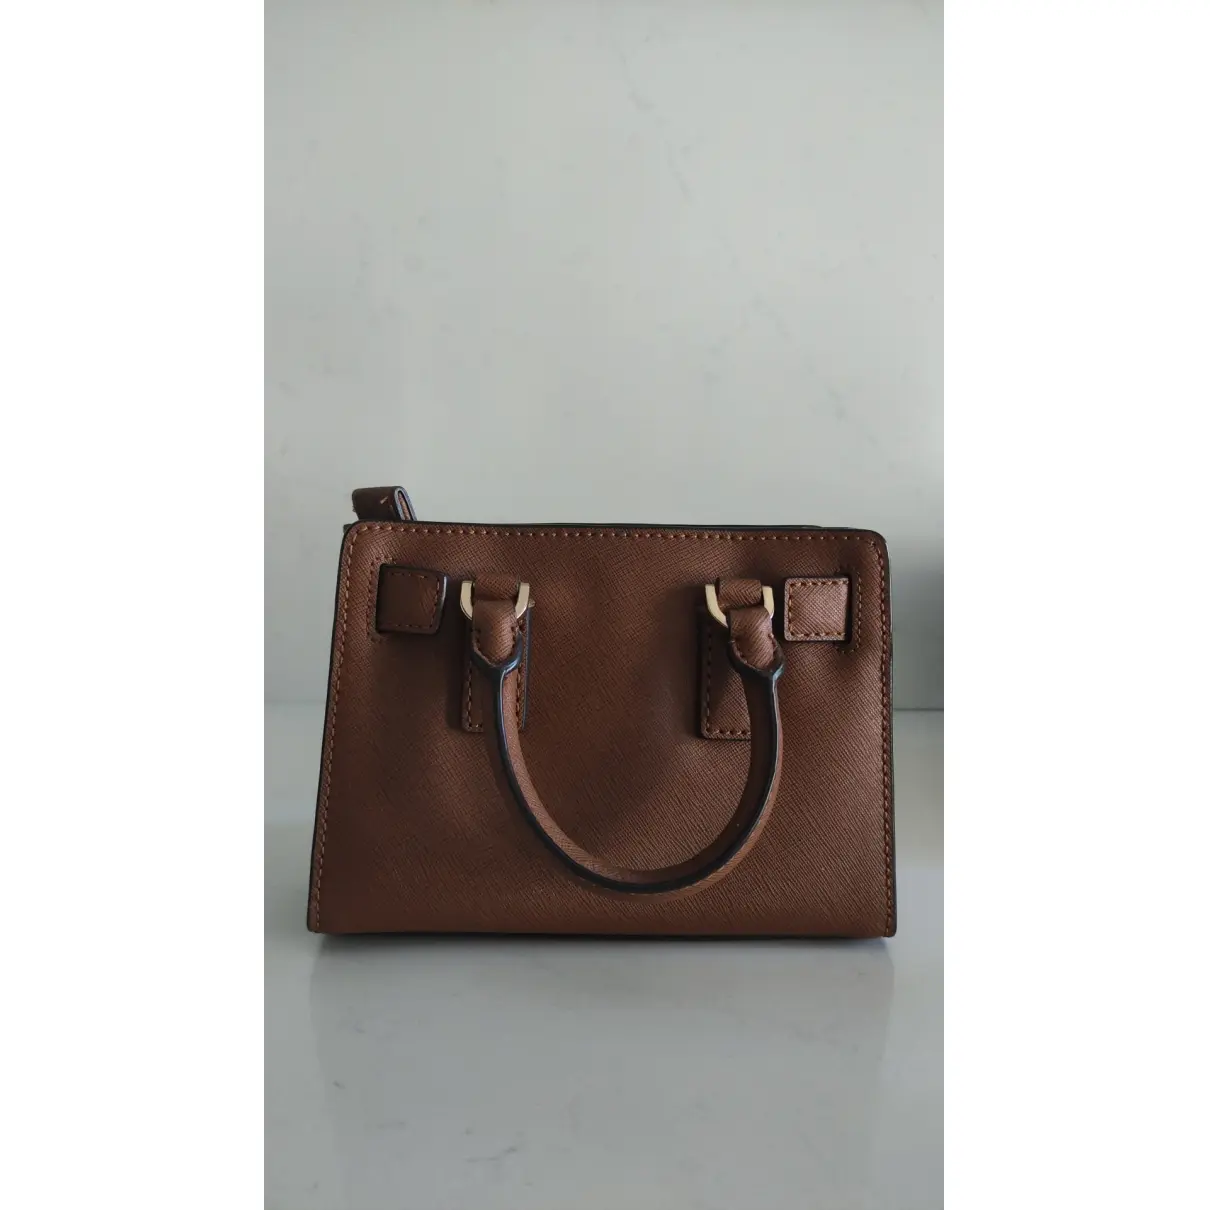 Buy Michael Kors Dillon leather crossbody bag online